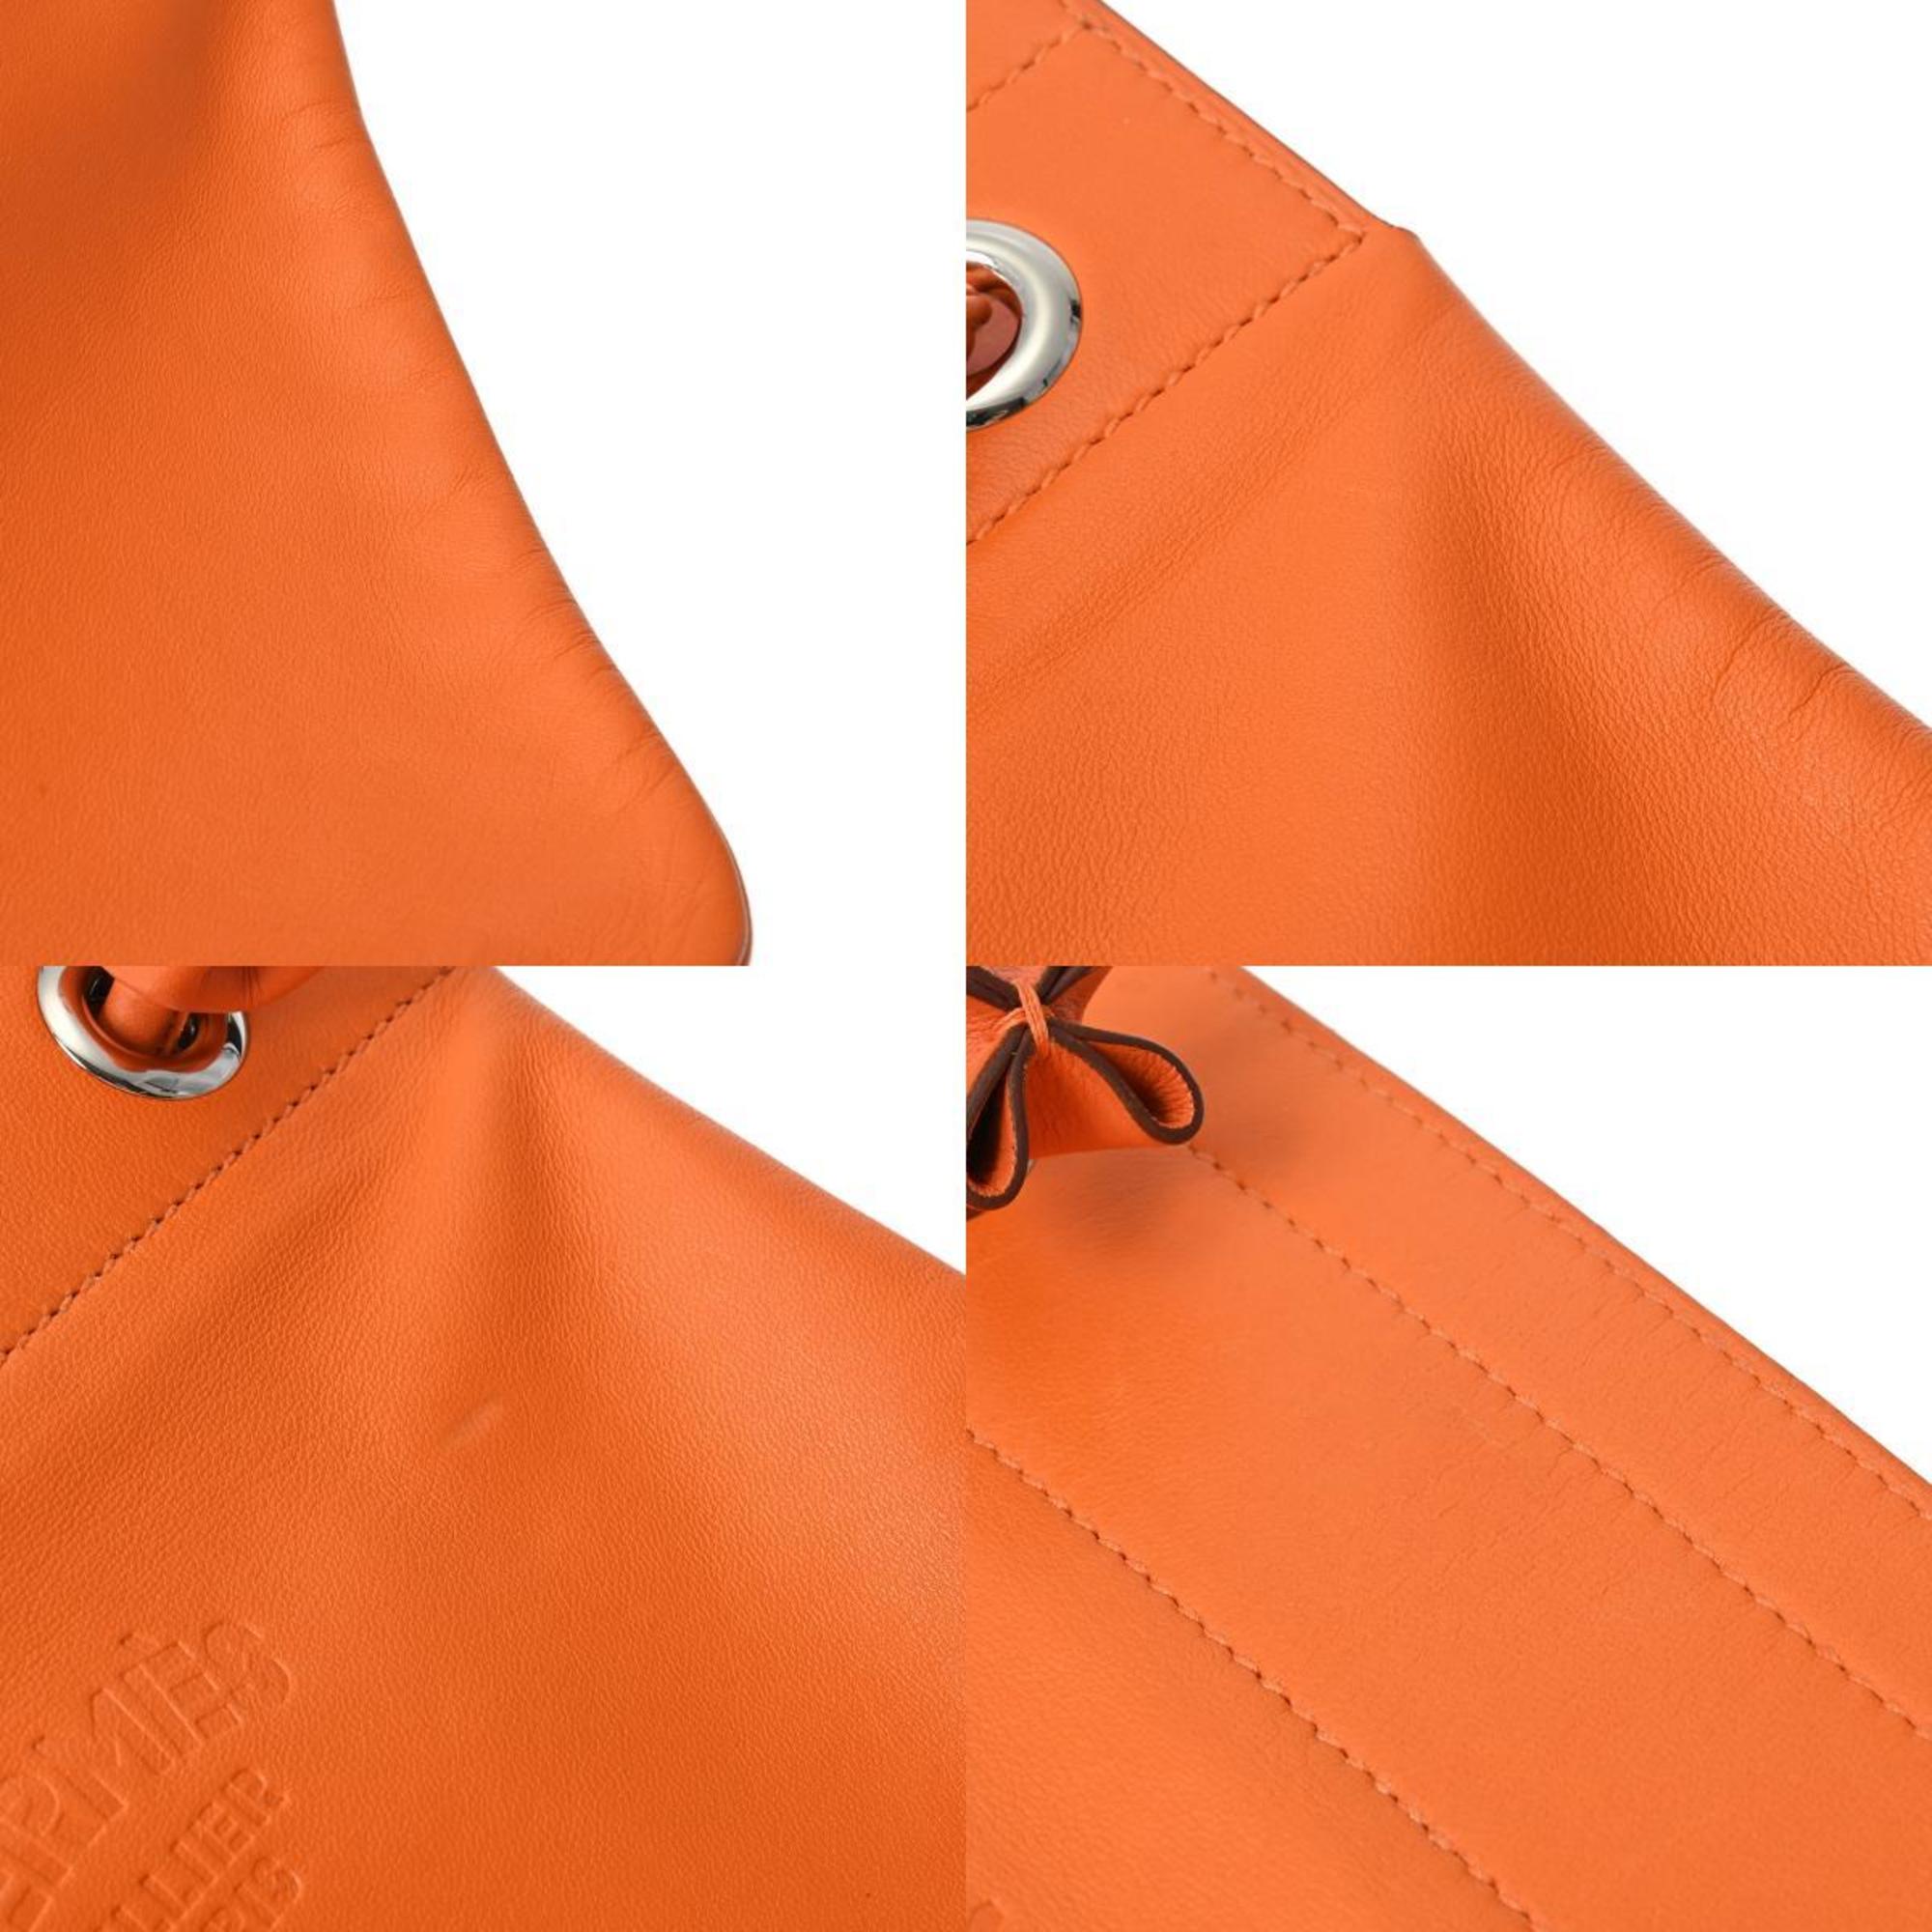 HERMES Sac Aline Orange Palladium Hardware - Women's Swift Leather Shoulder Bag